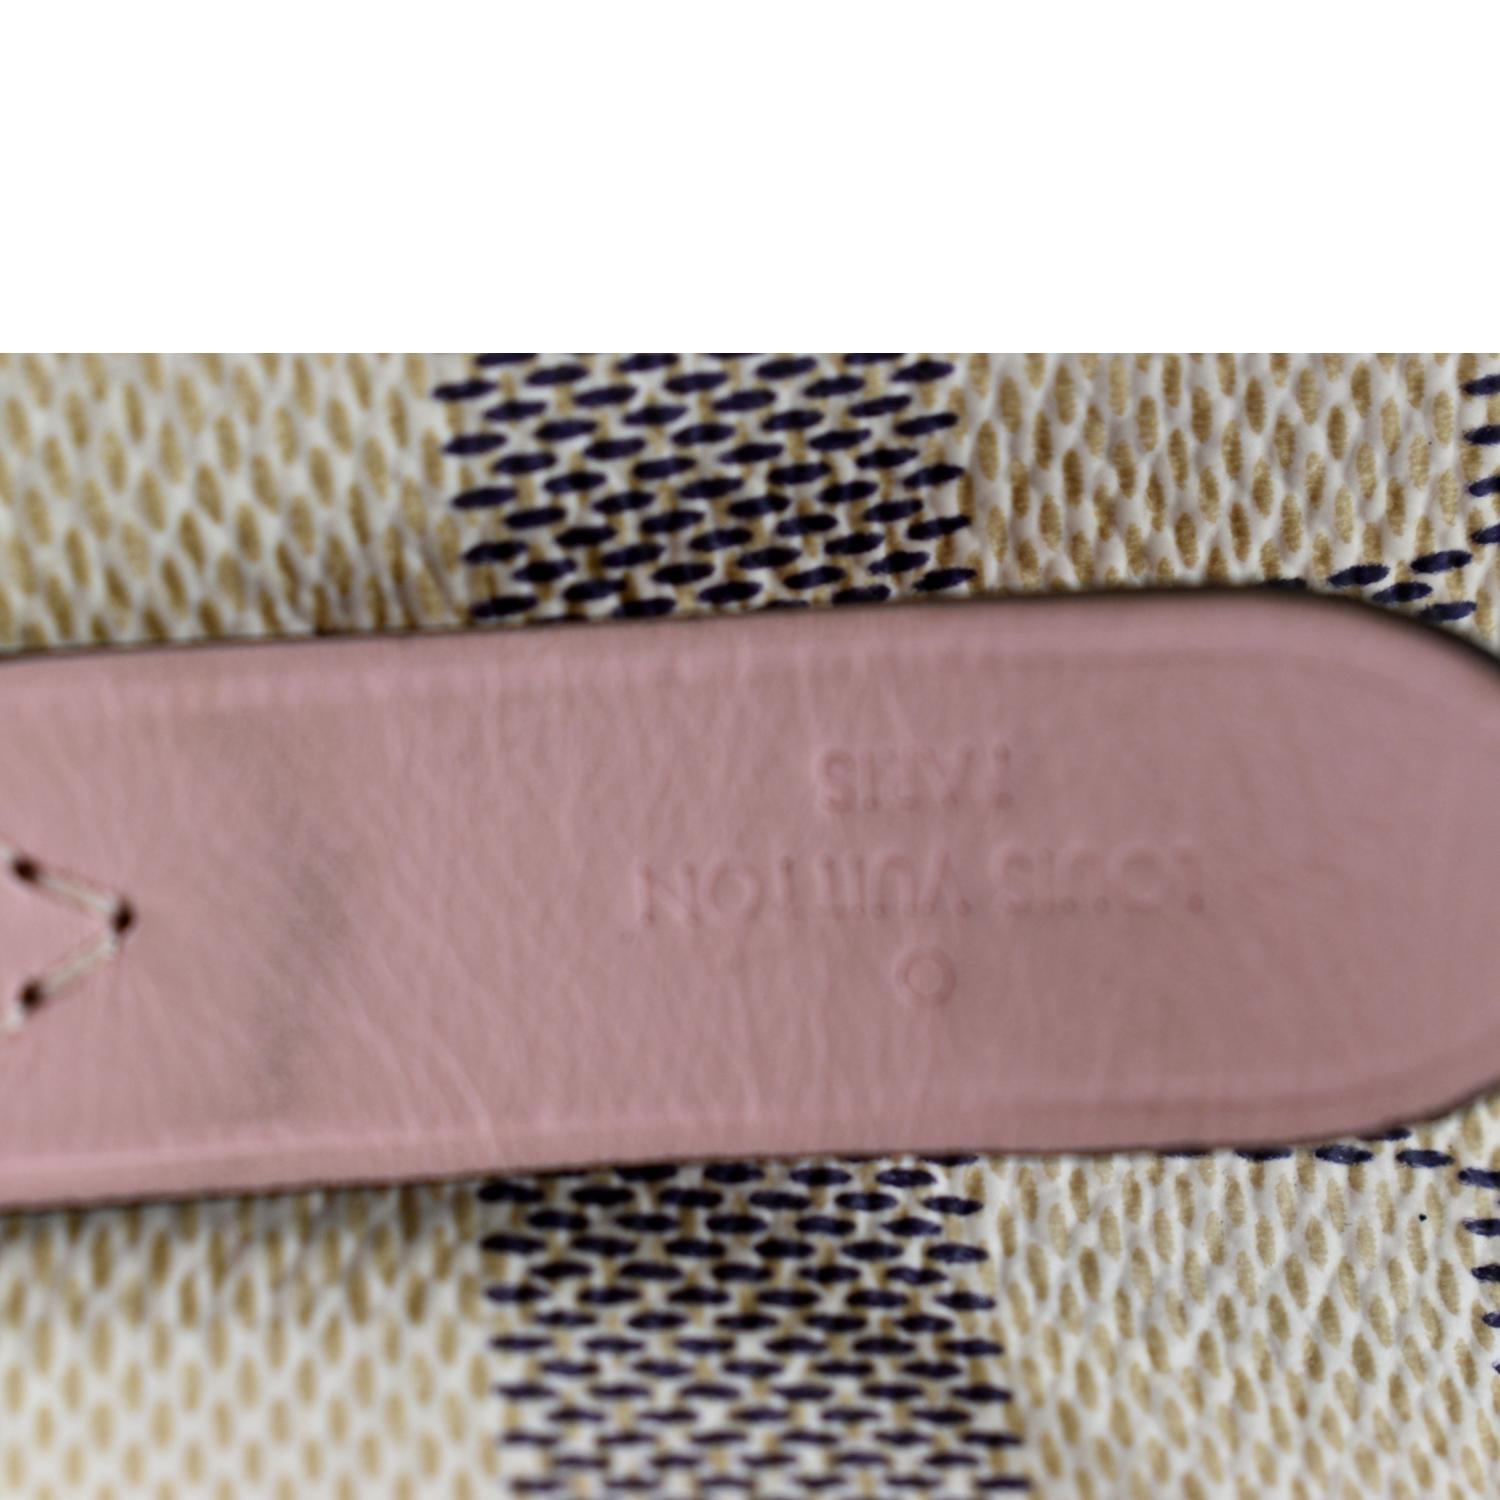 Date Code & Stamp] Louis Vuitton Neoneo